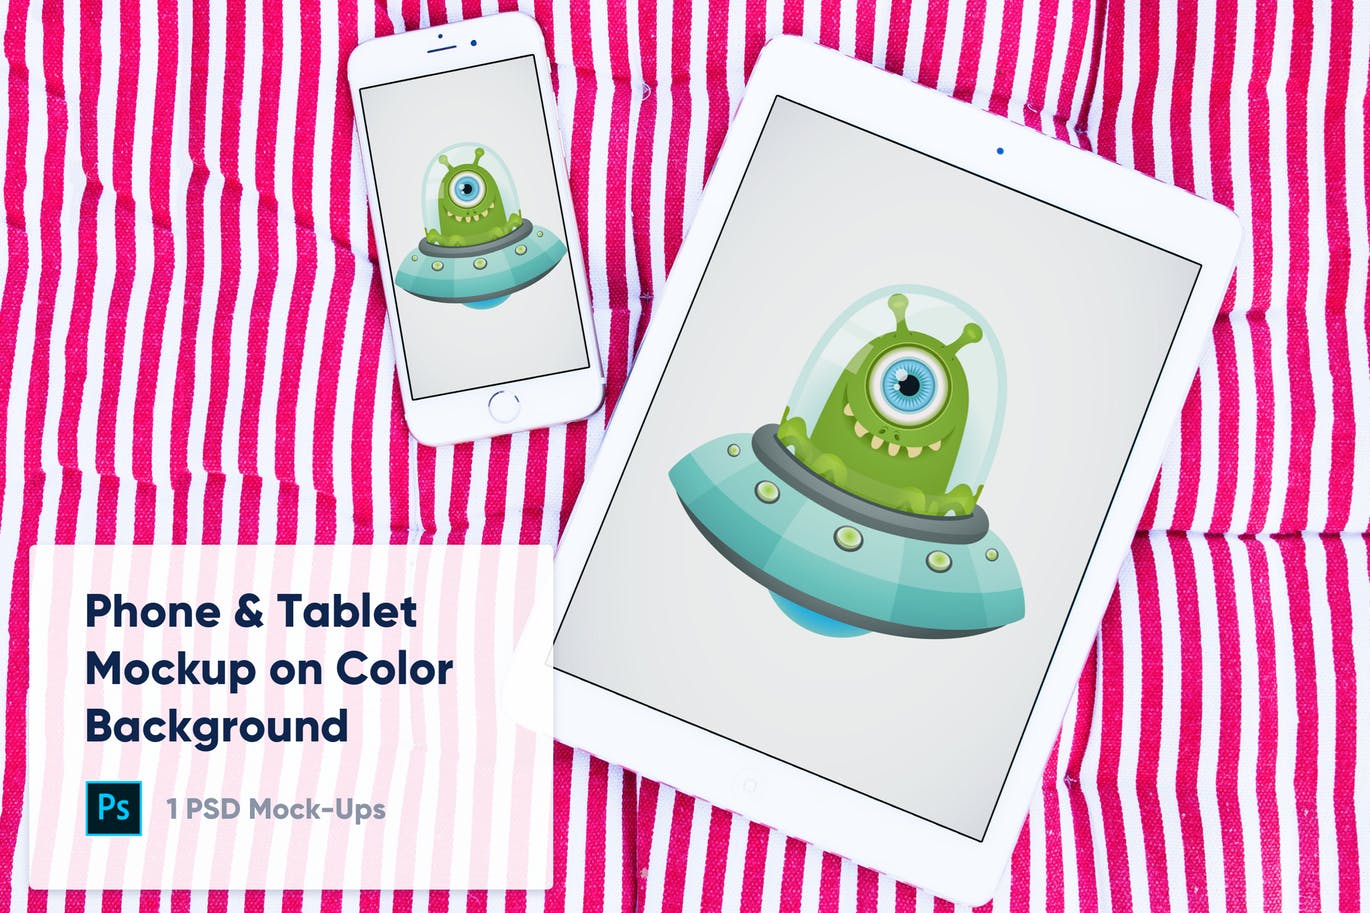 彩色背景平板电脑&手机素材库精选样机模板 1 Tablet & Phone Mockup on Color Background插图